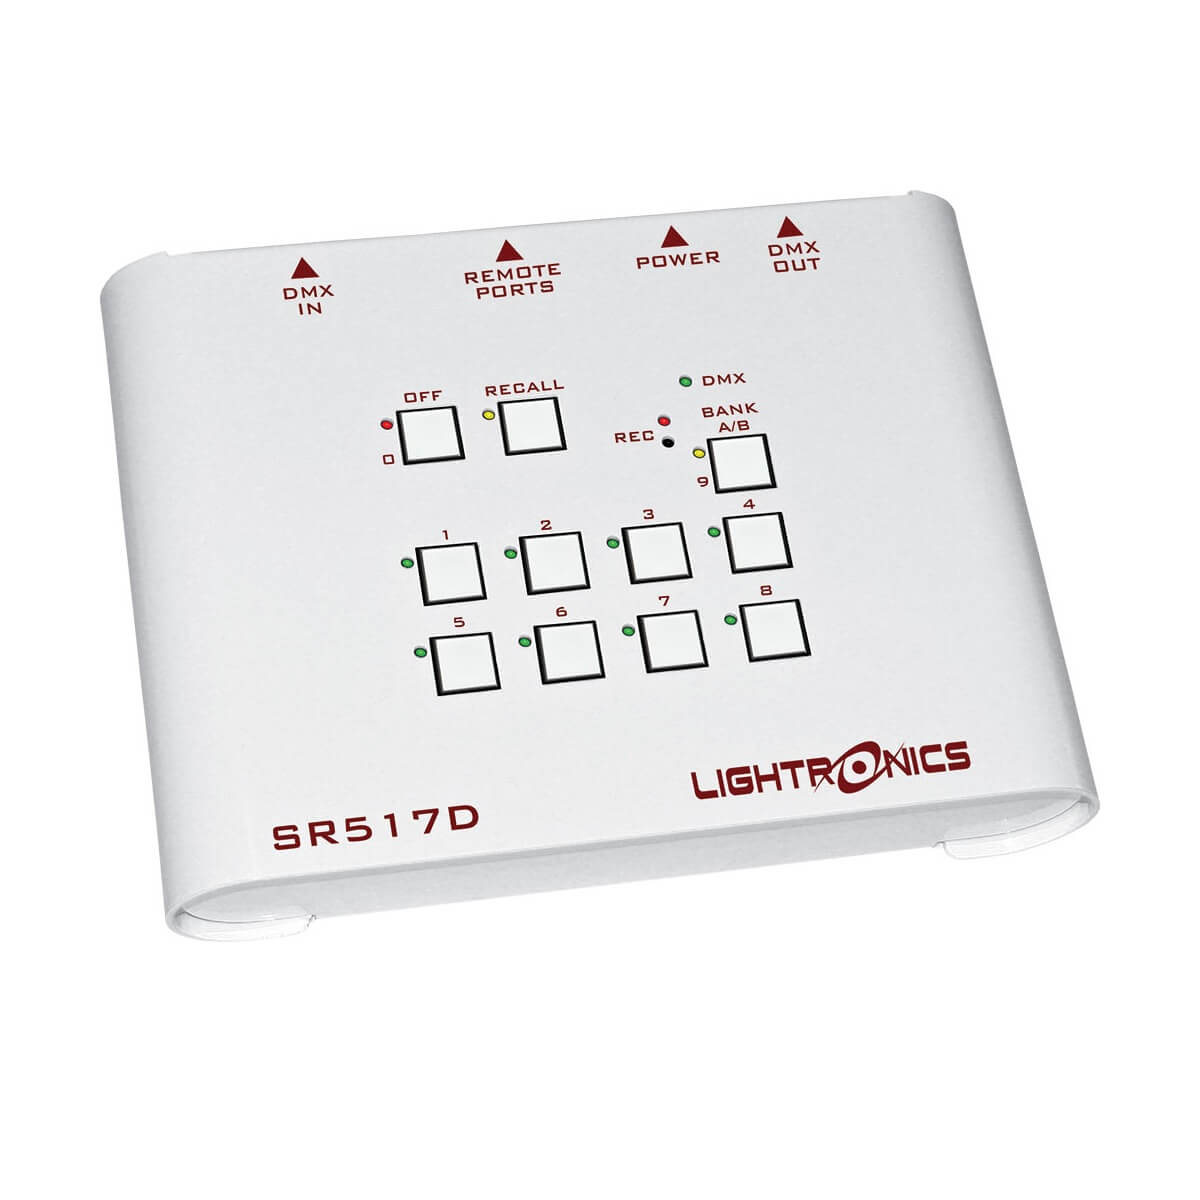 Lightronics SR517D - Desktop Architectural Lighting Controller